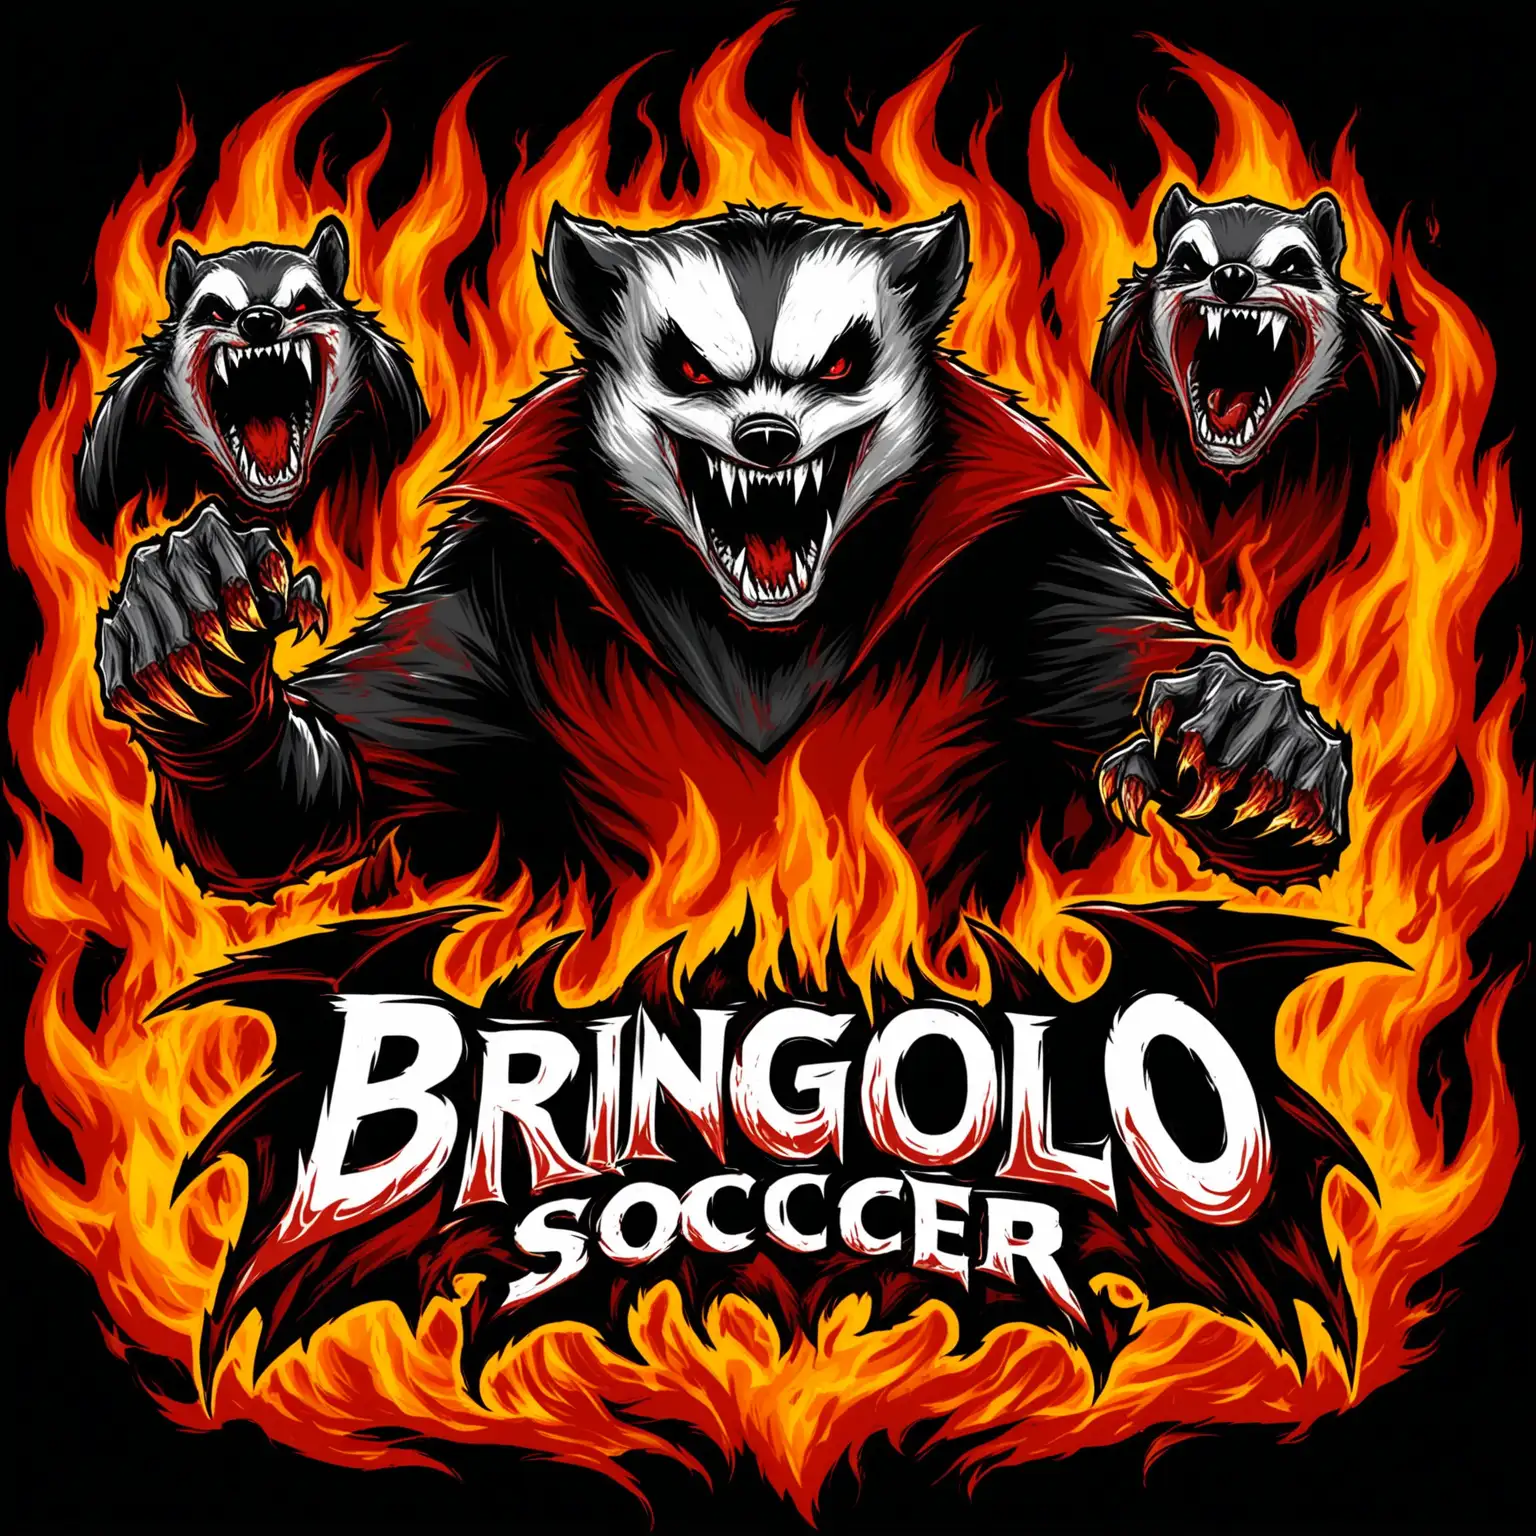 Fiery Gothic Badger Vampire Soccer Team Logo